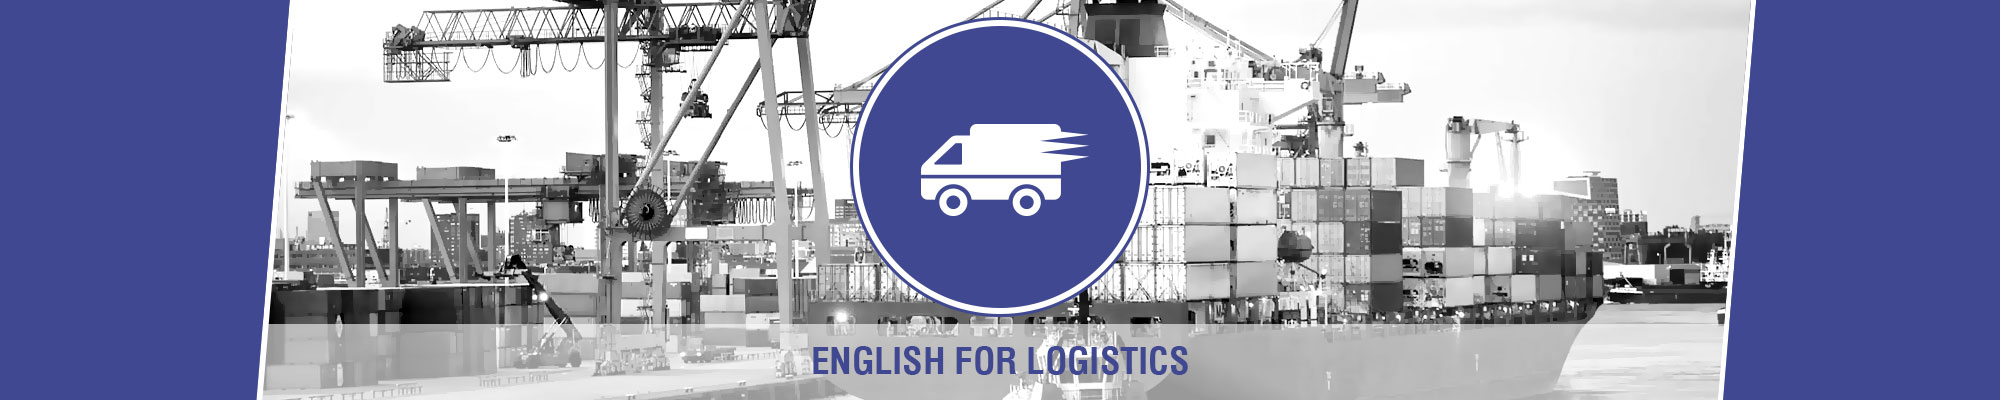 Anglokom Corporate Language Training Bangkok - English for Logistics